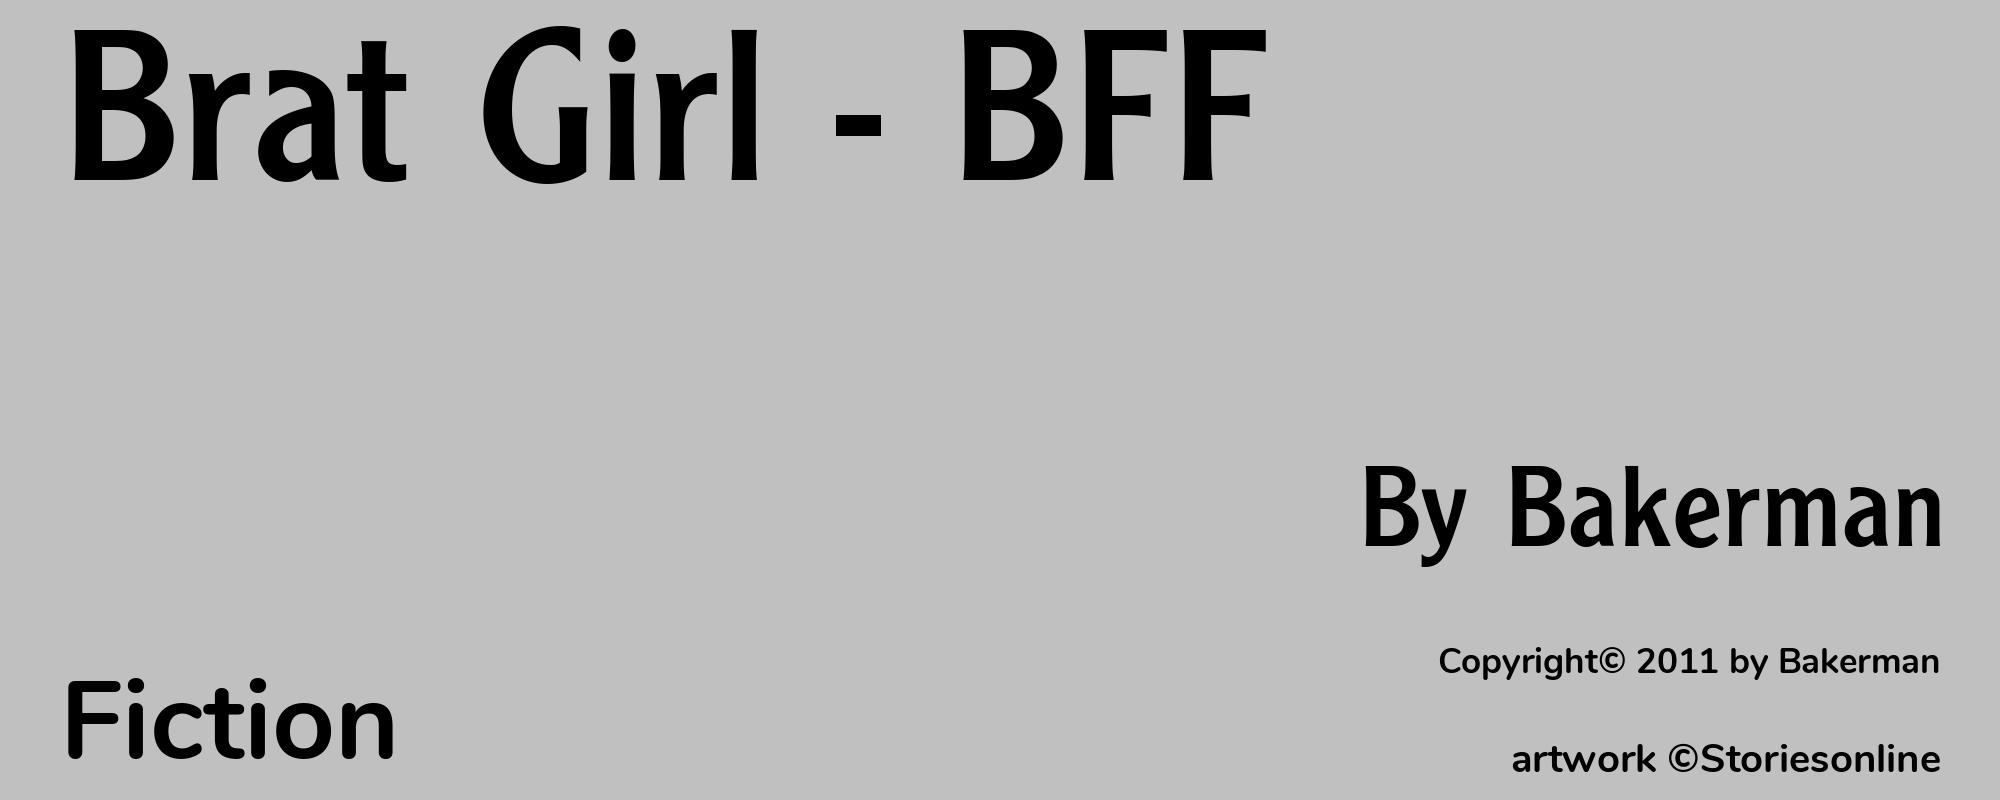 Brat Girl - BFF - Cover